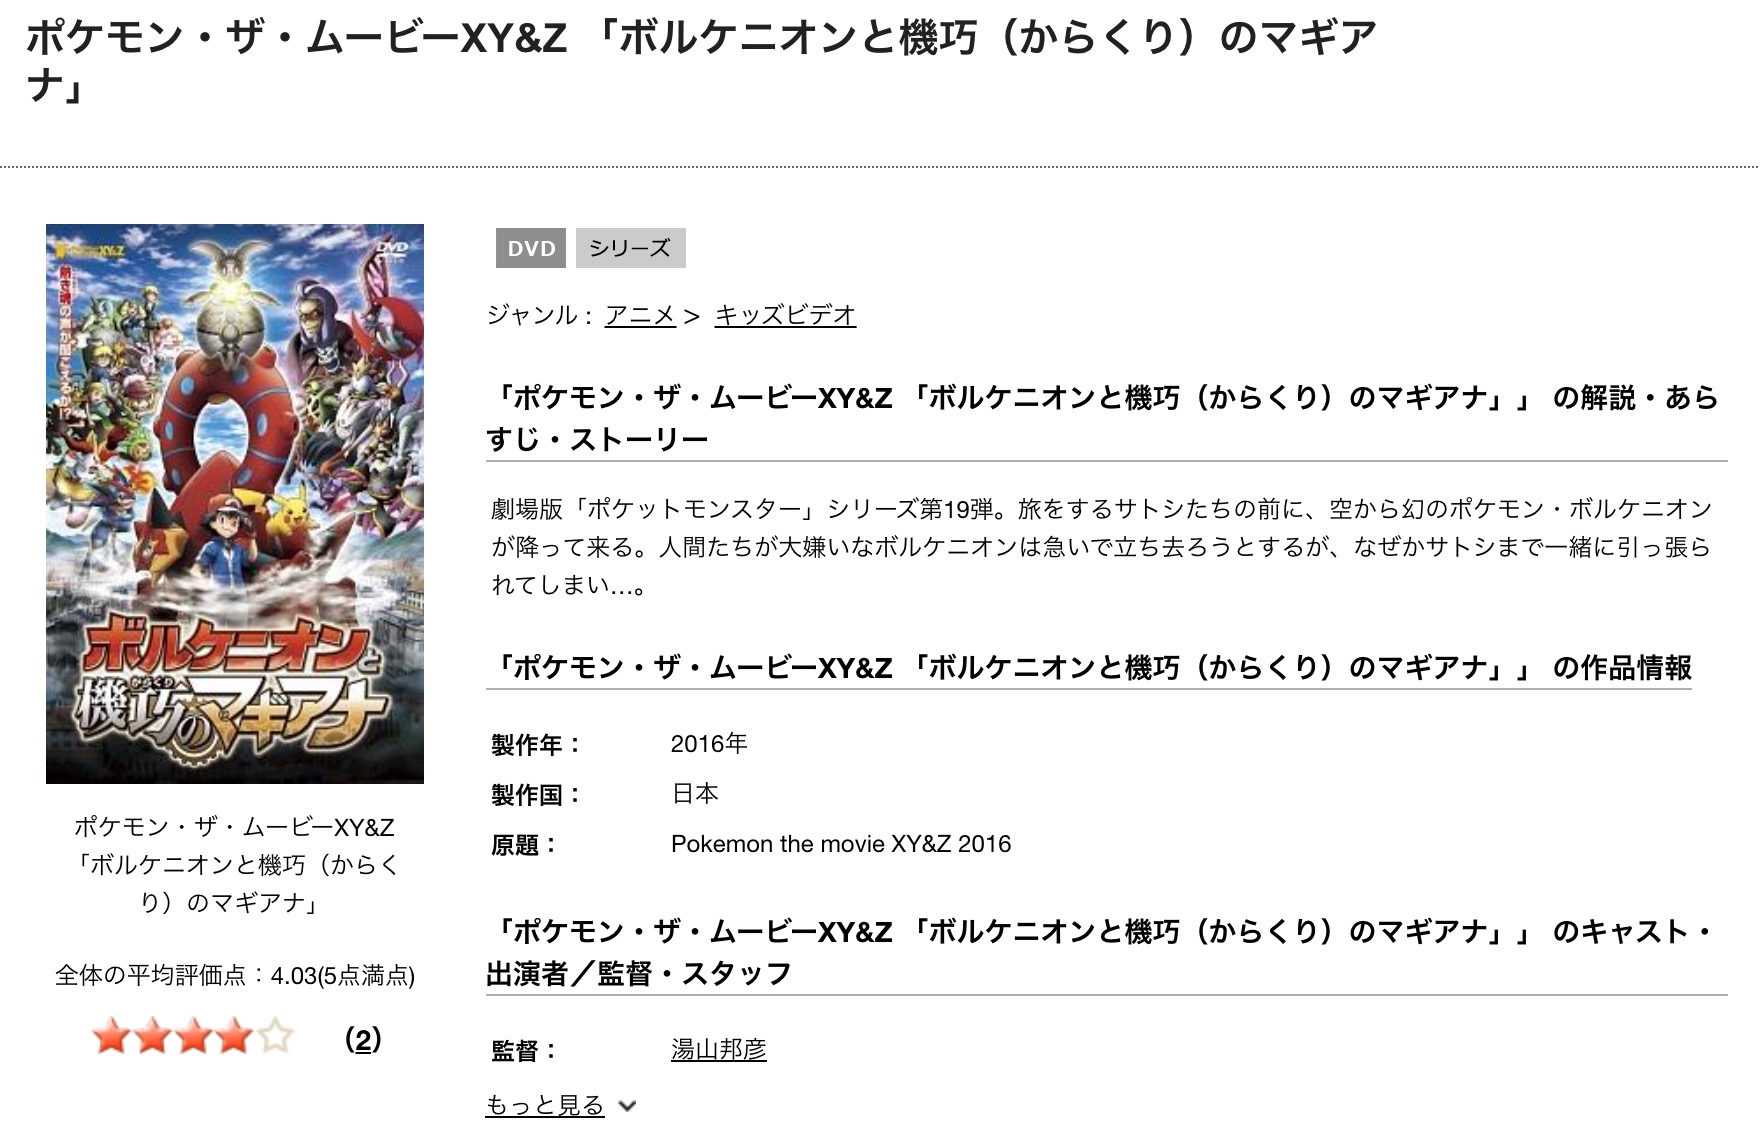 Stream XY&Z Movie Version // XY&Z 映画, ムービー // XY&Z 膜